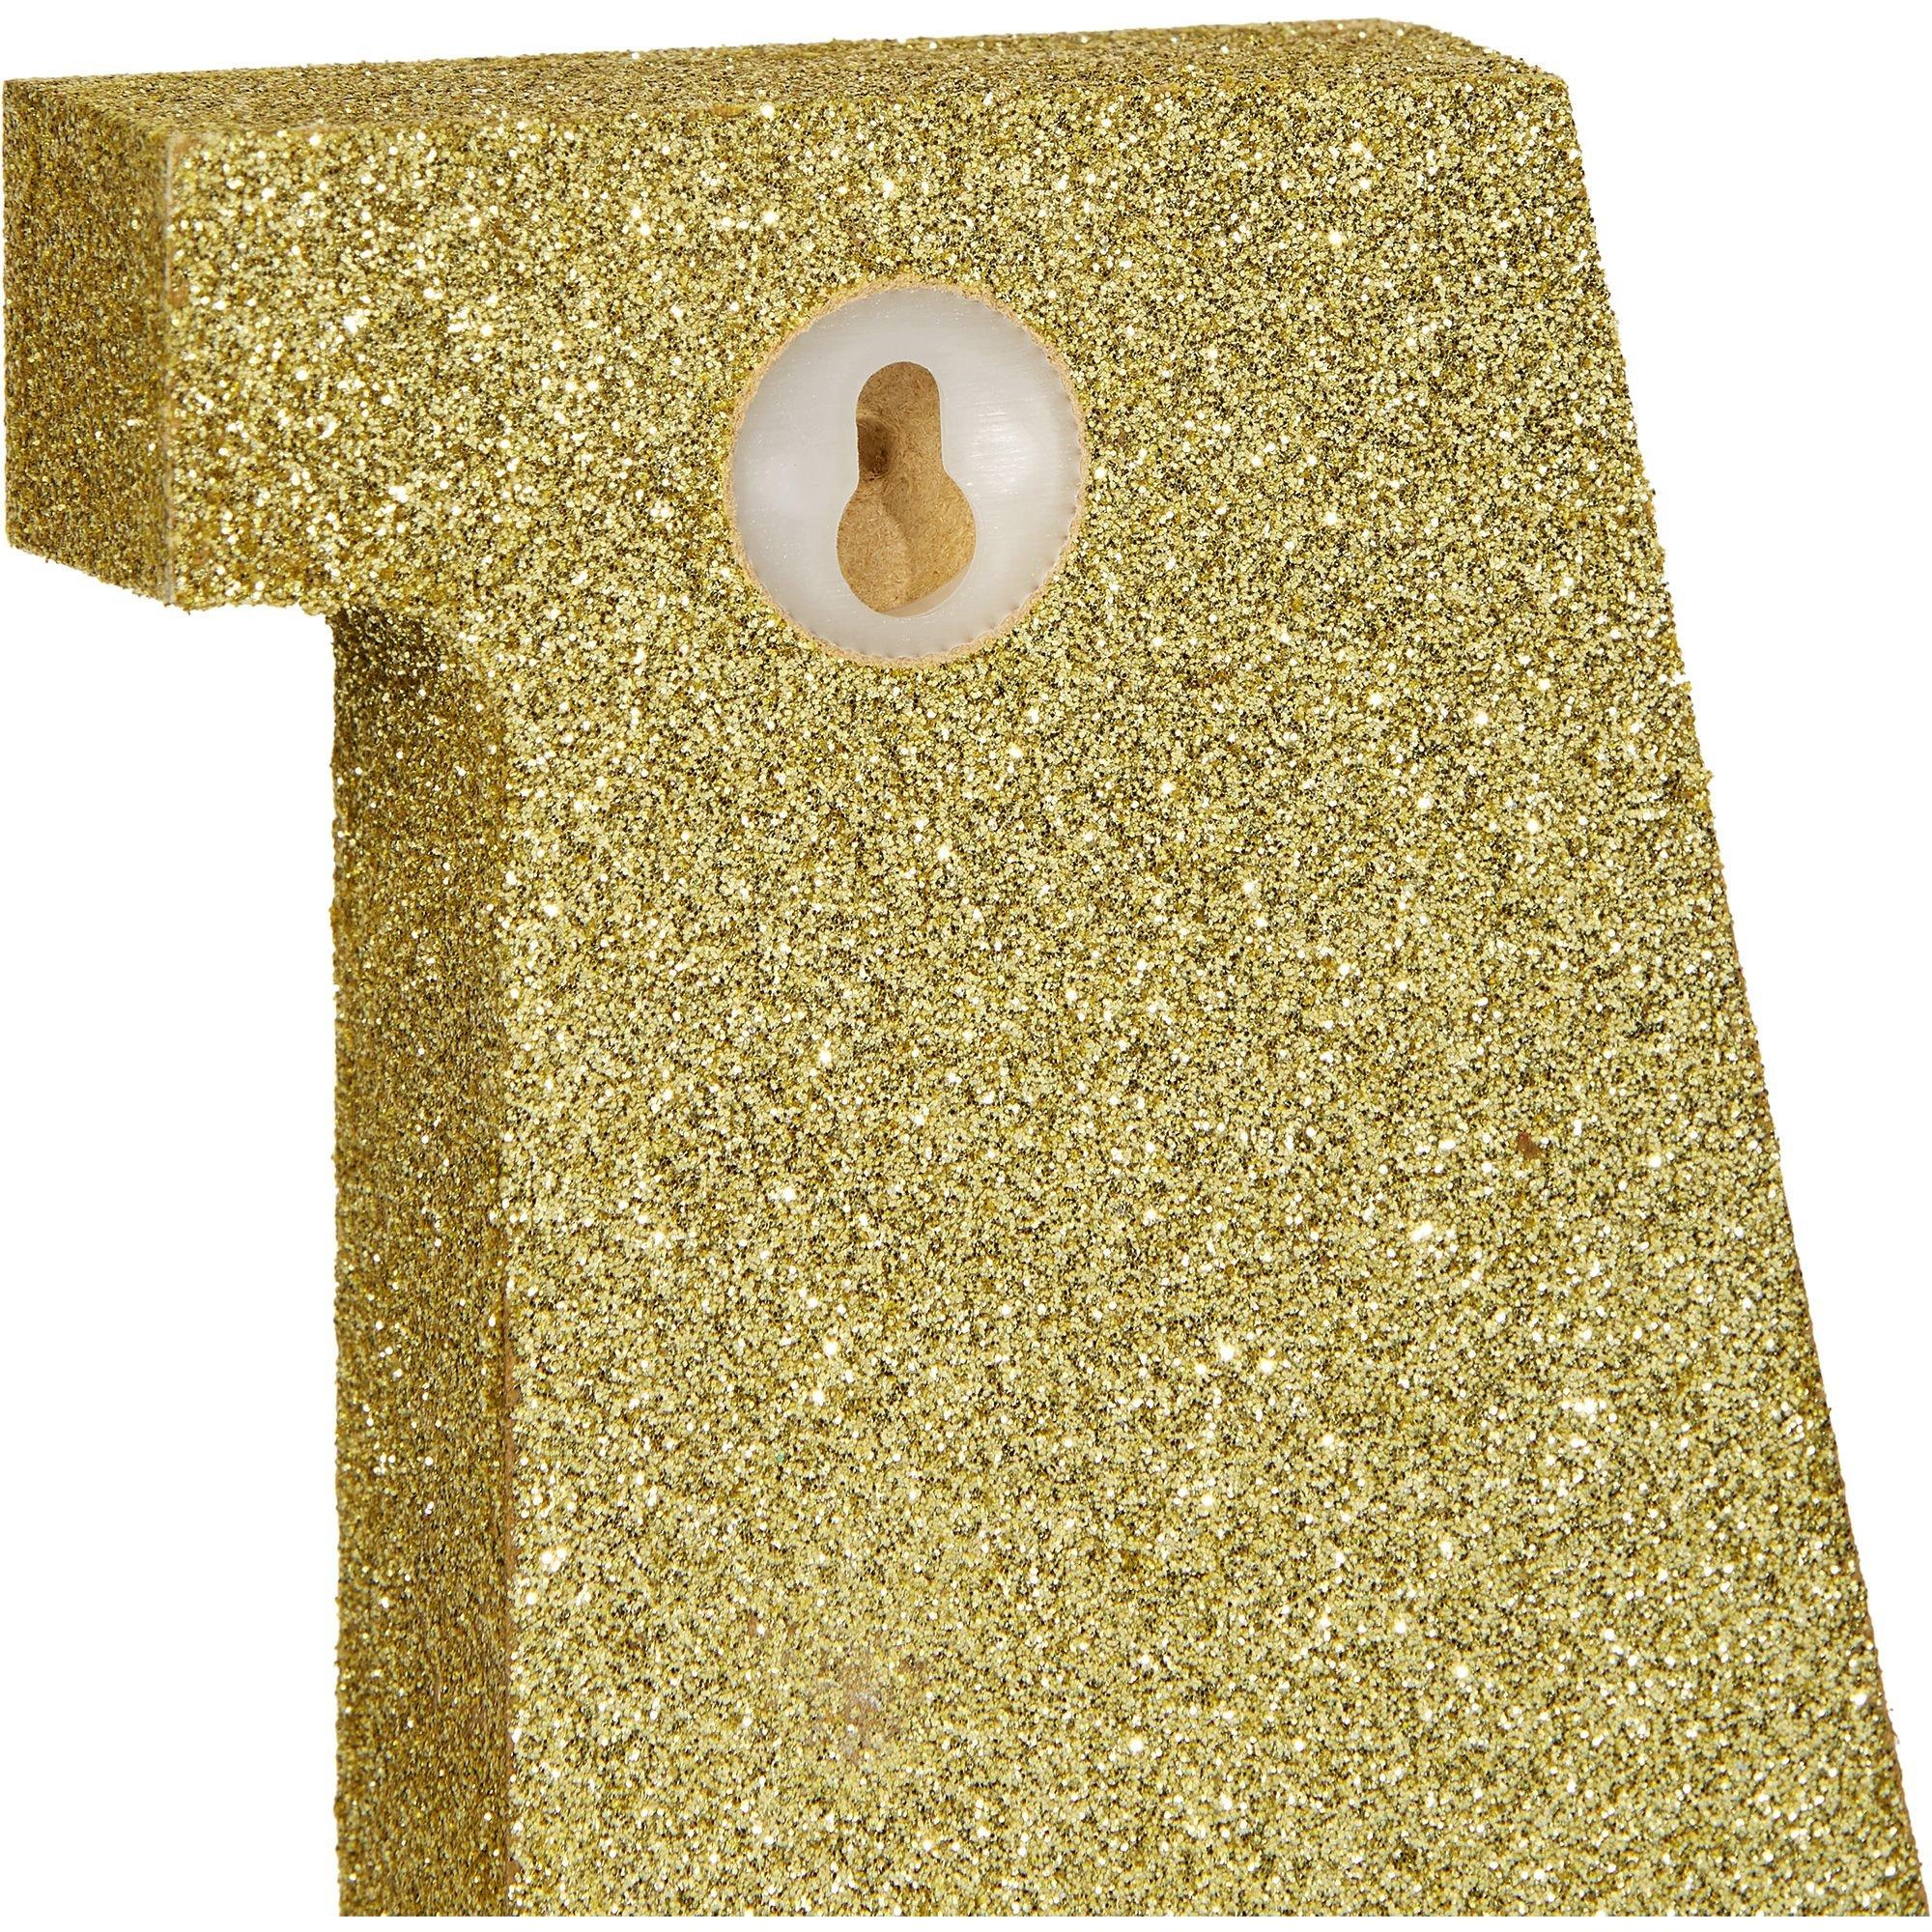 Glitter Gold Number 7 Sign